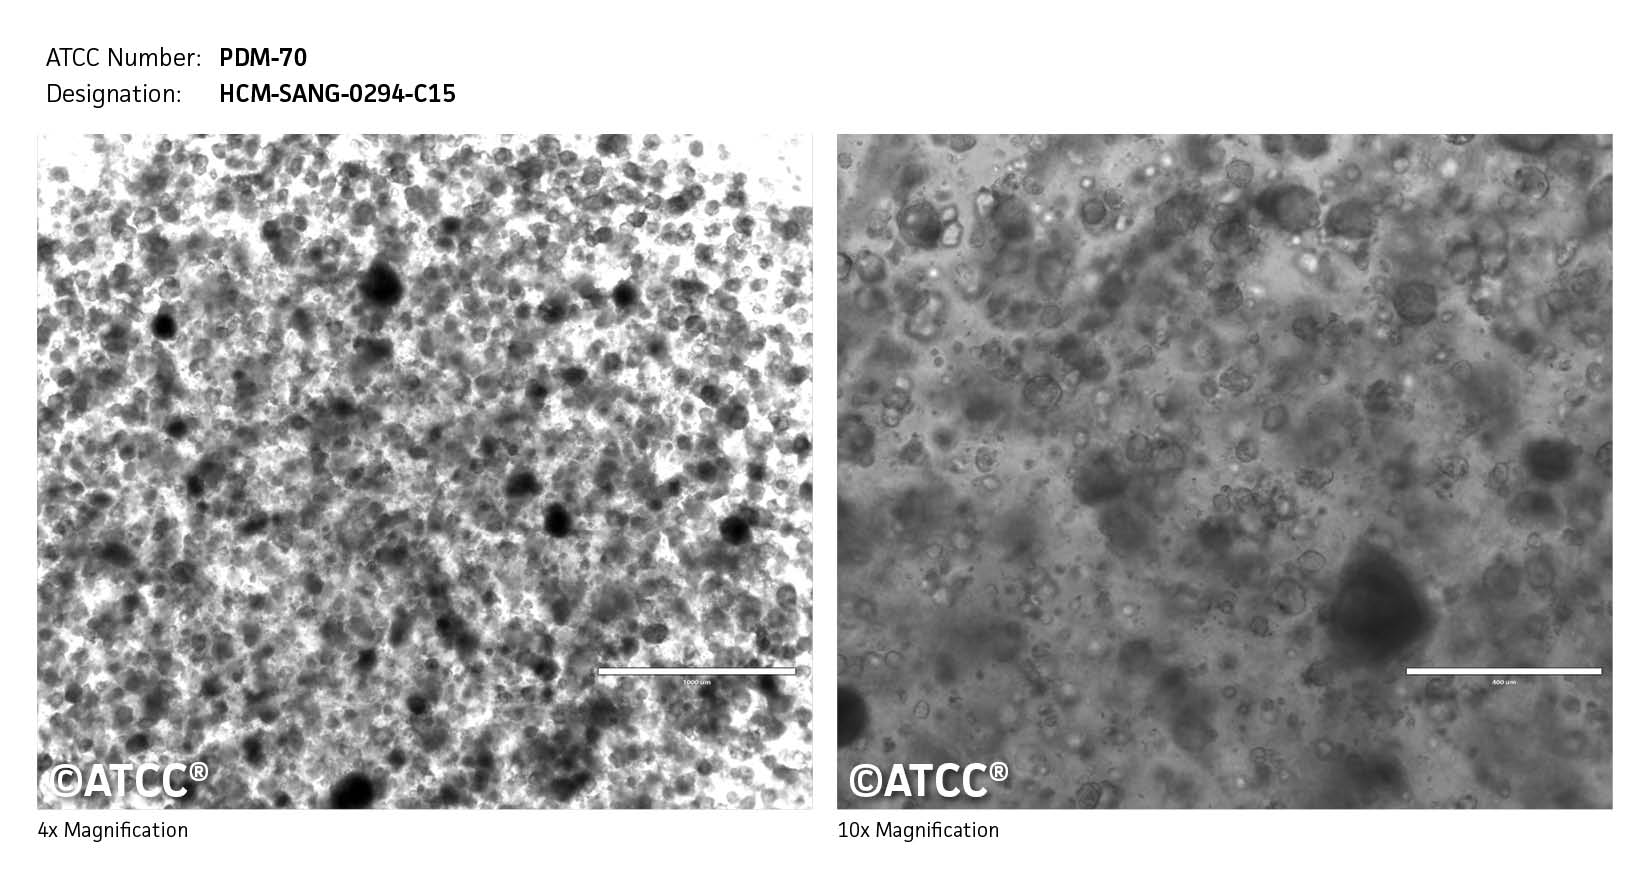 ATCC PDM-70 Cell Micrograph